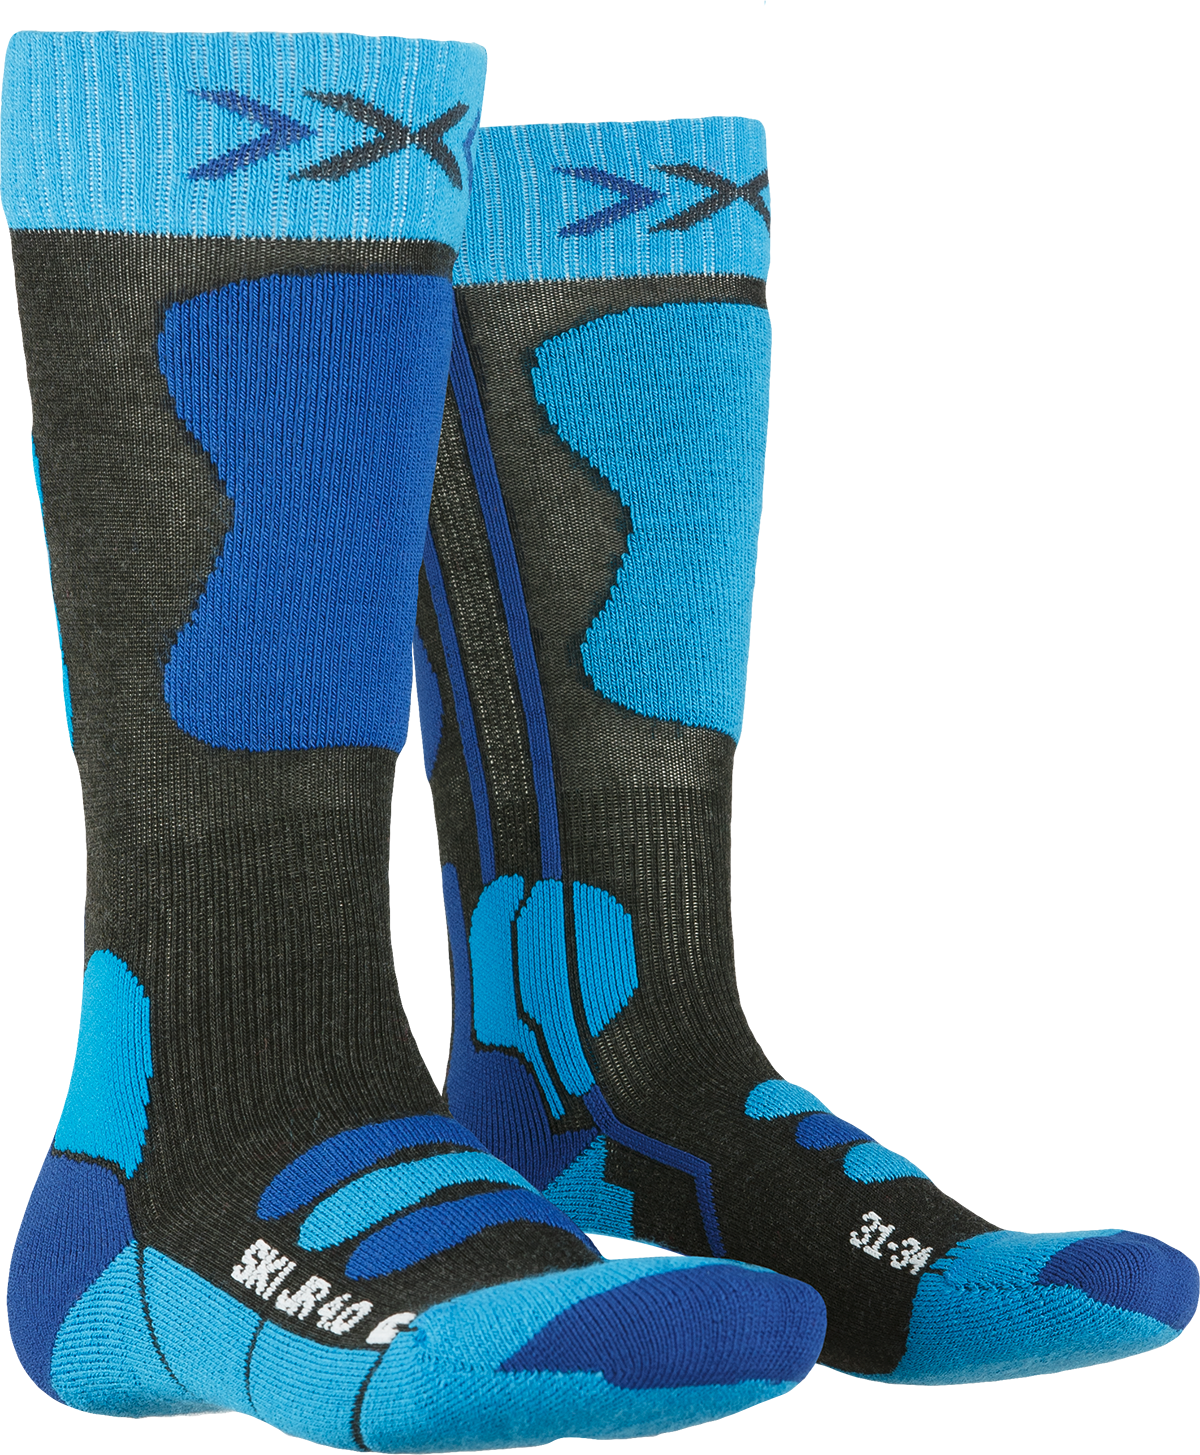 Calcetines de esquí para niños X-Socks Ski Jr 4.0 xsss00w19j-g047